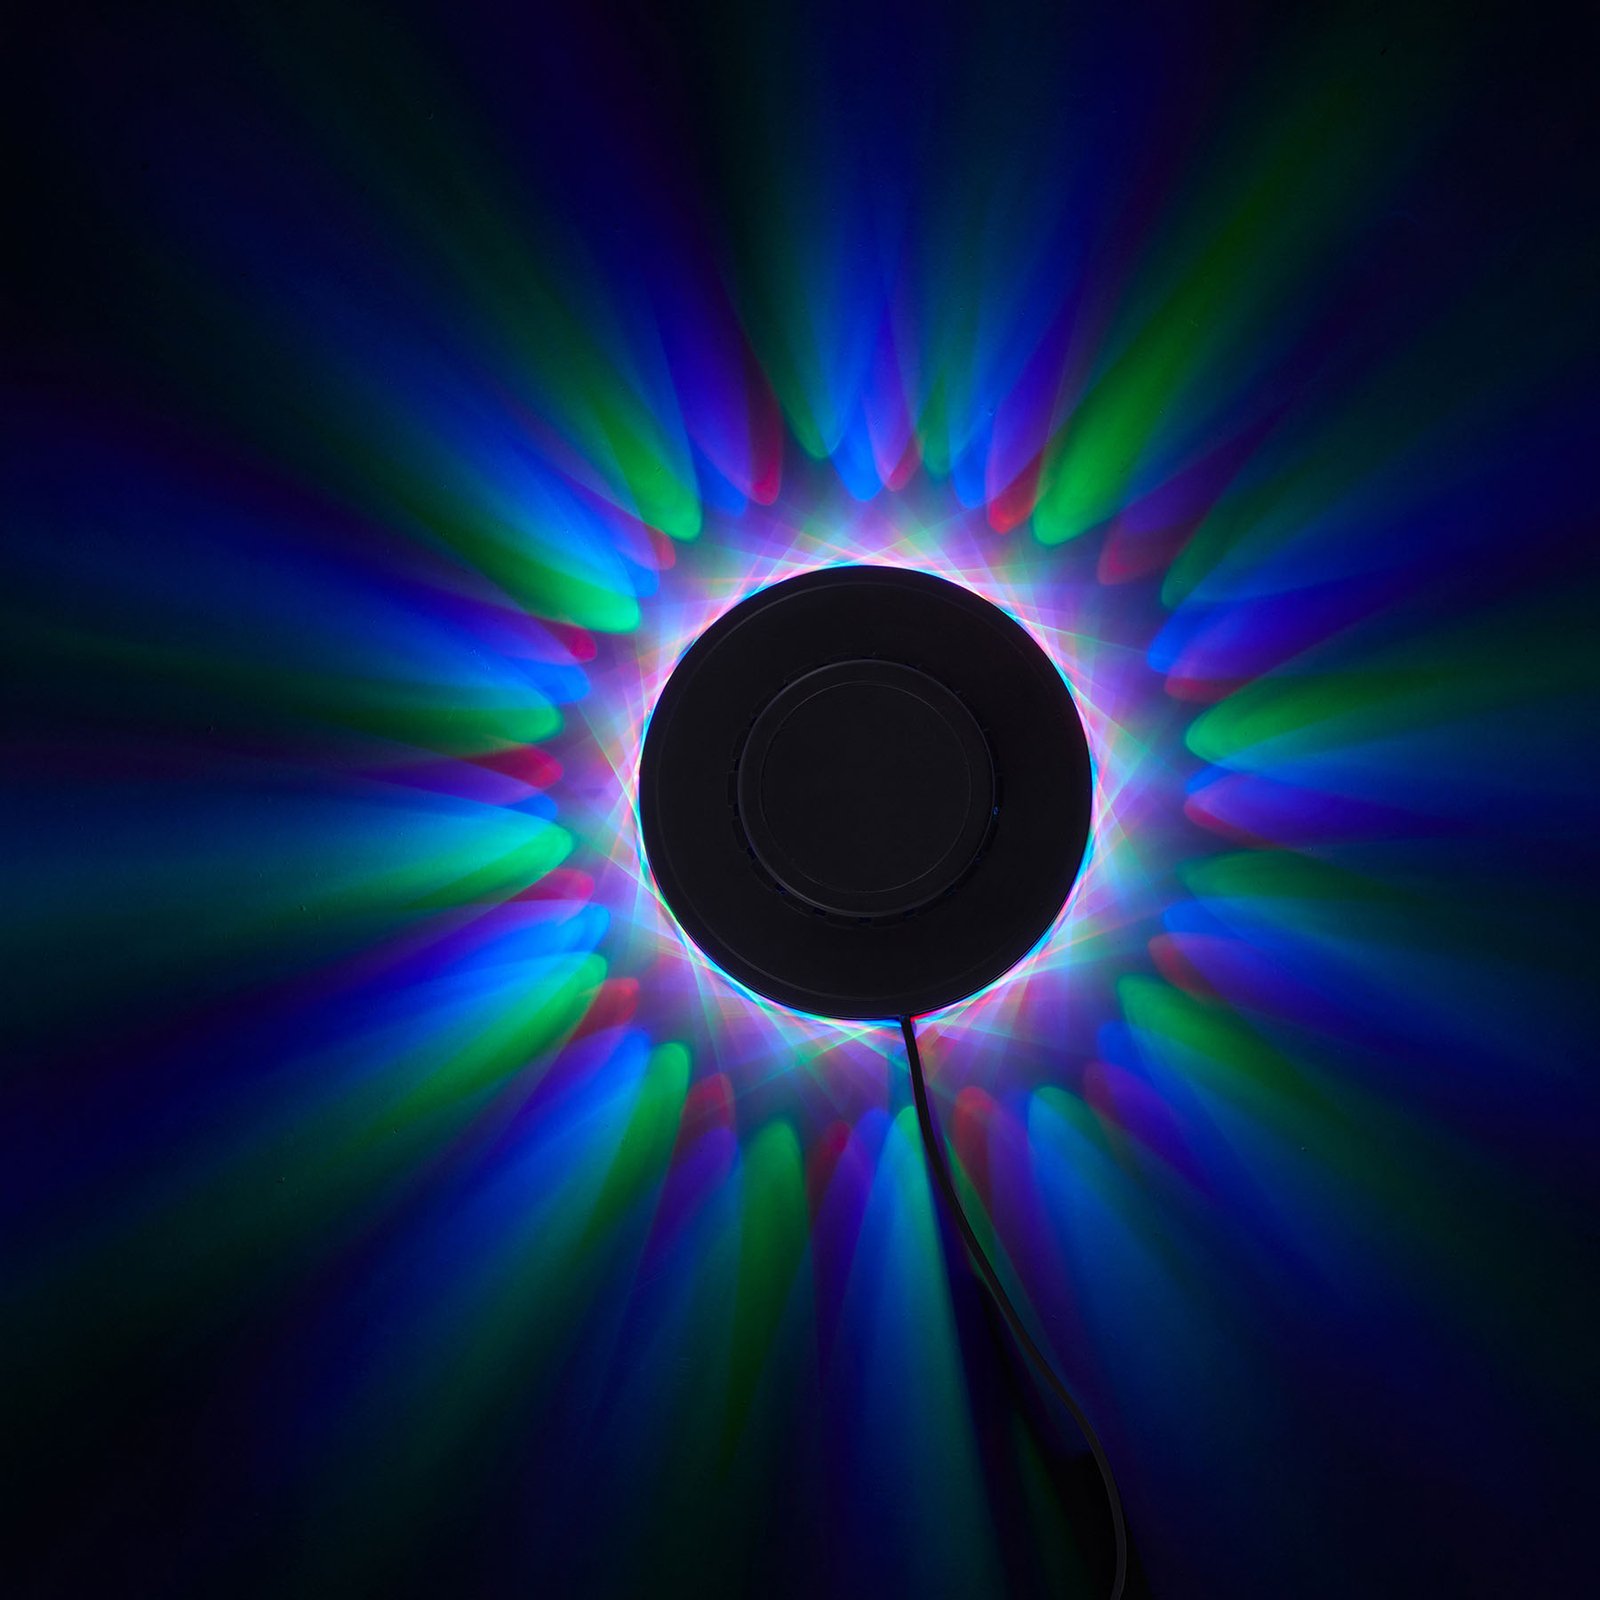 RGB LED decorative light - decorative light with music sensor